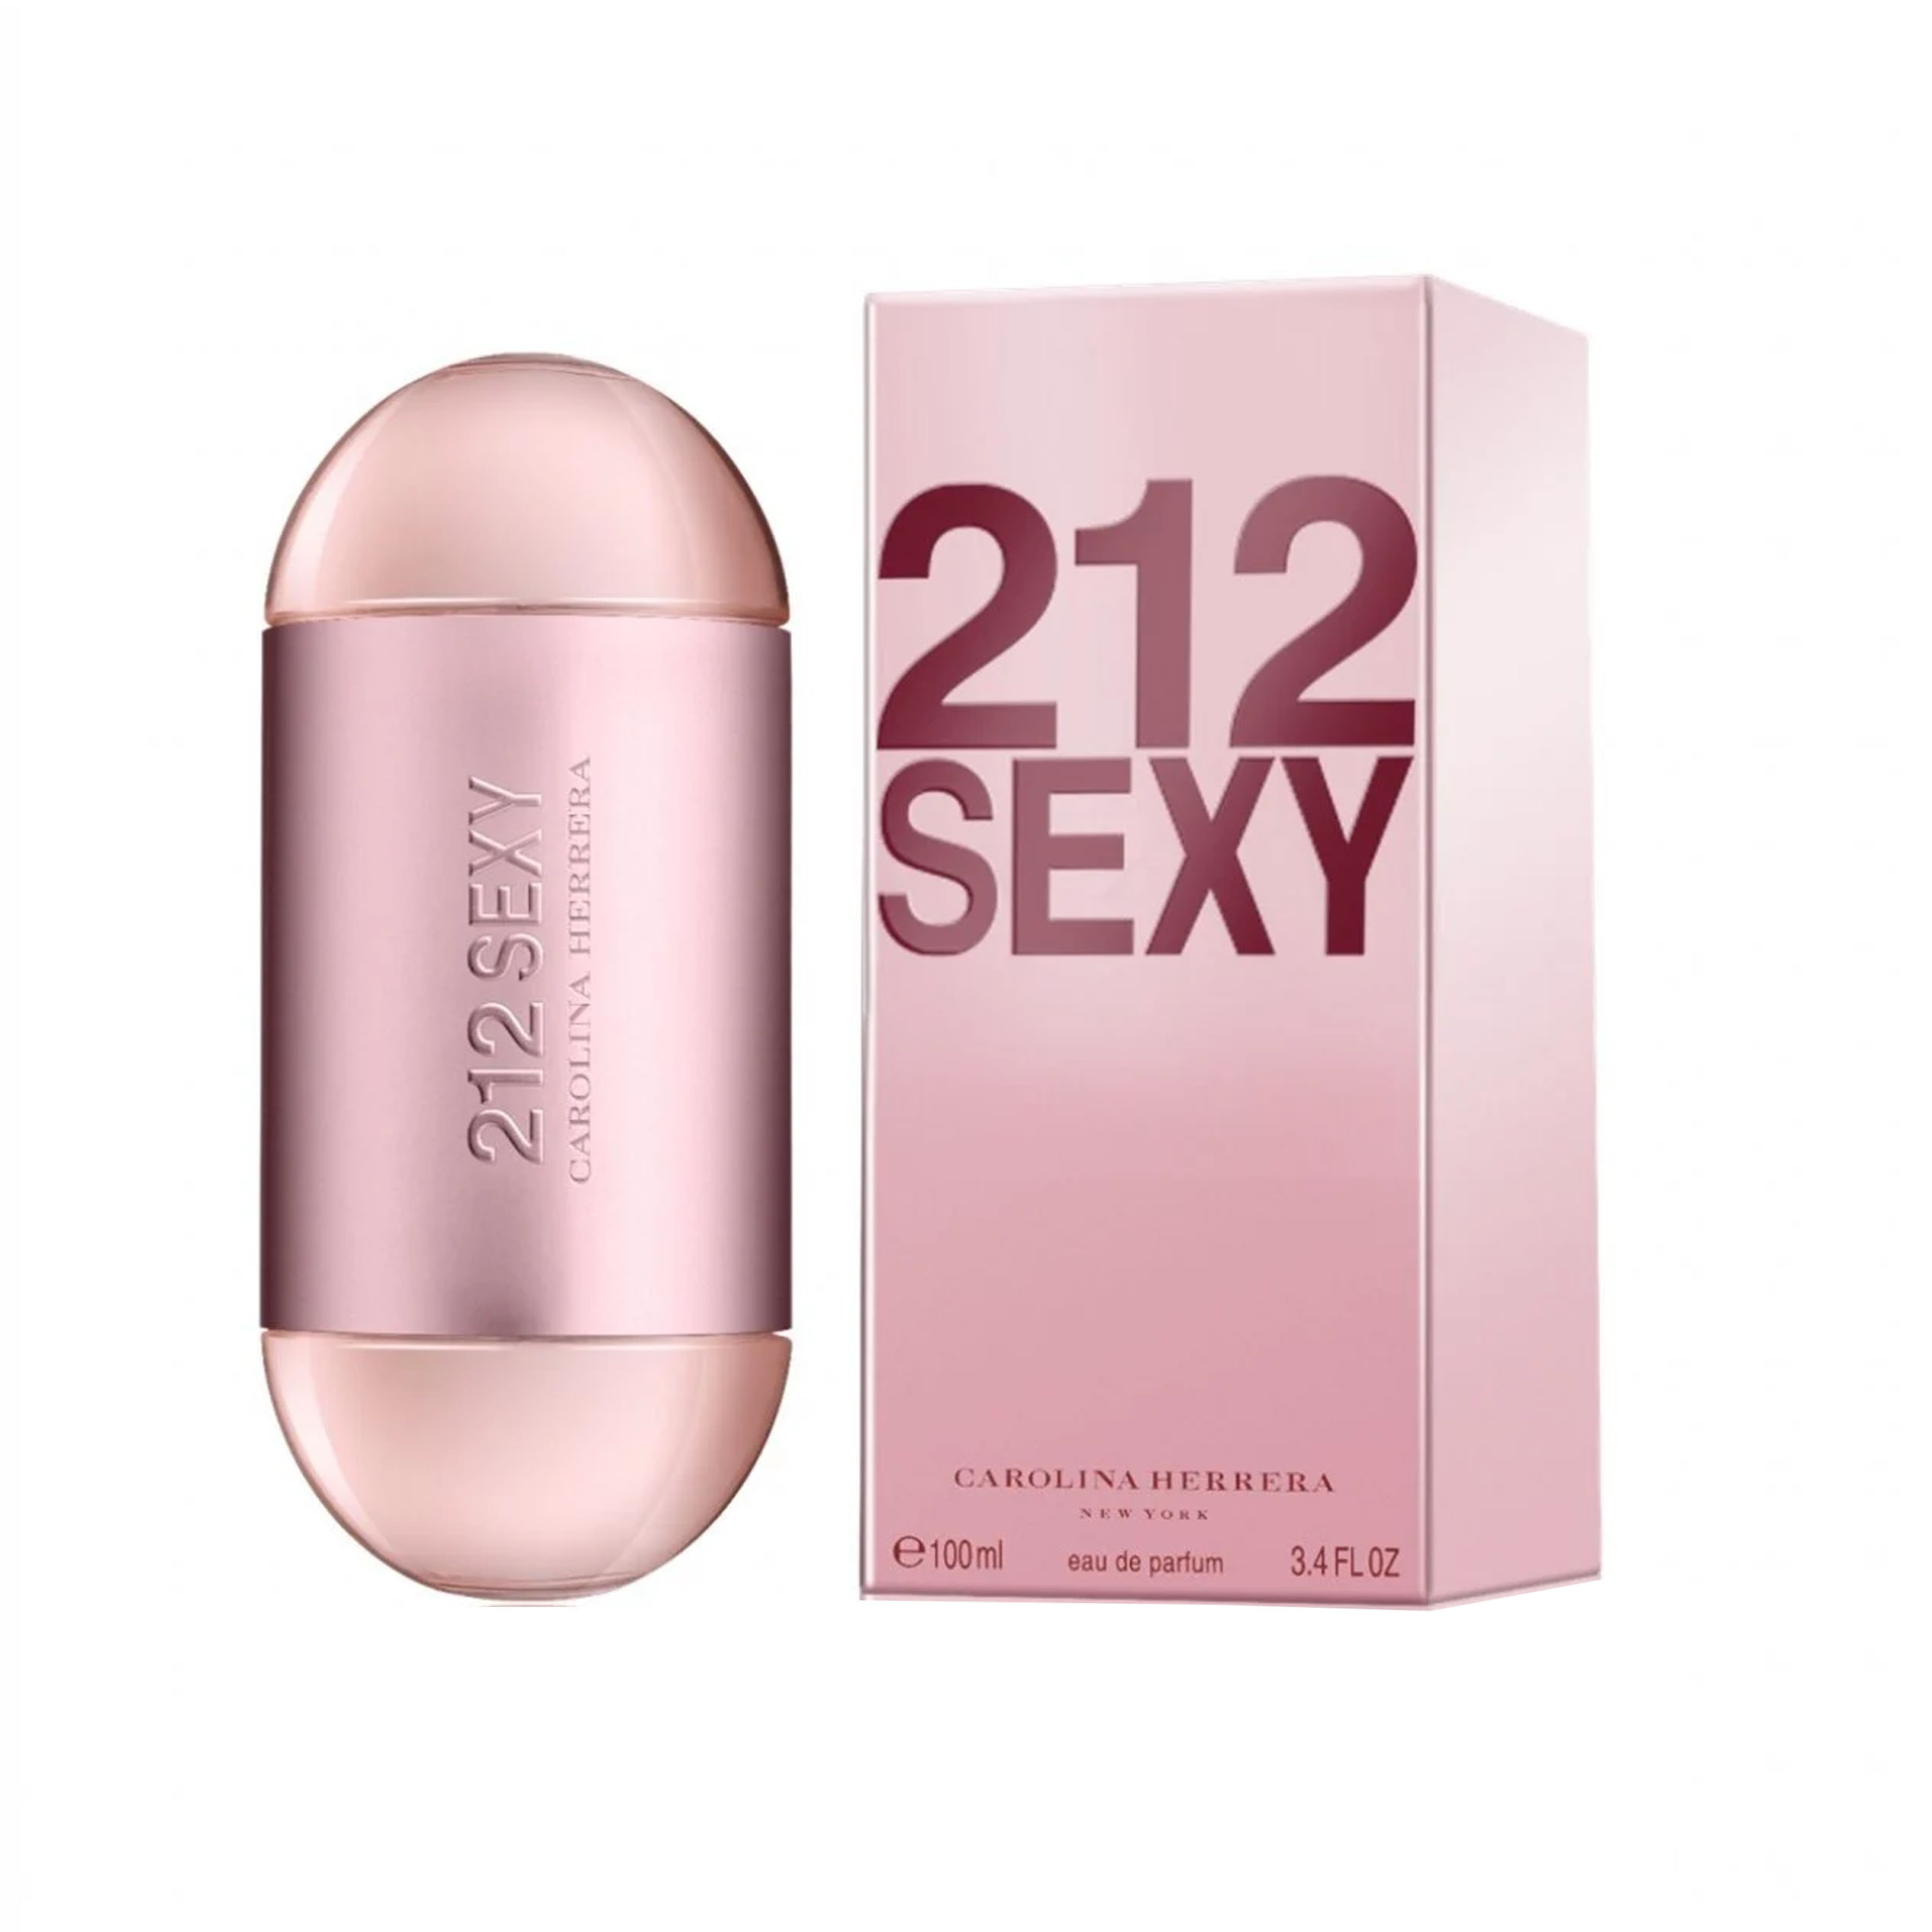 Perfume 212 Sexy Carolina Herrera  (Replica Con Fragancia Importada)- Mujer